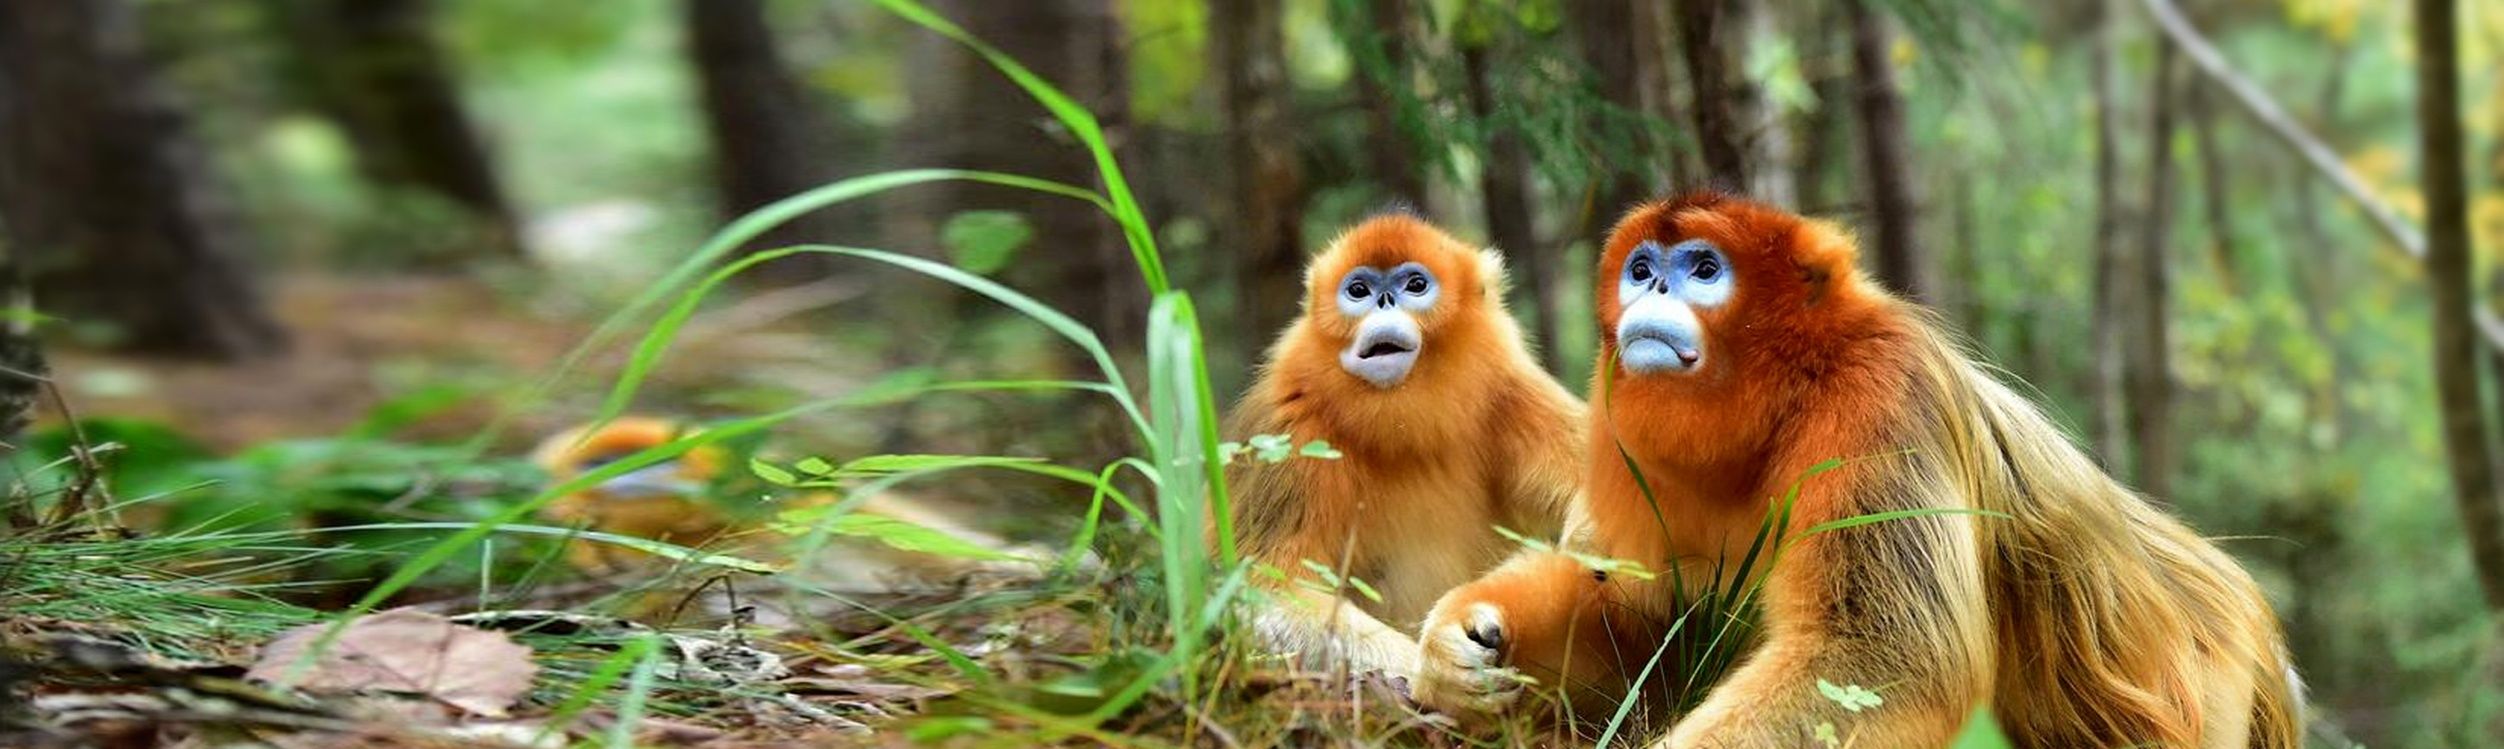 Sneezin' in the rain: New monkey discovered